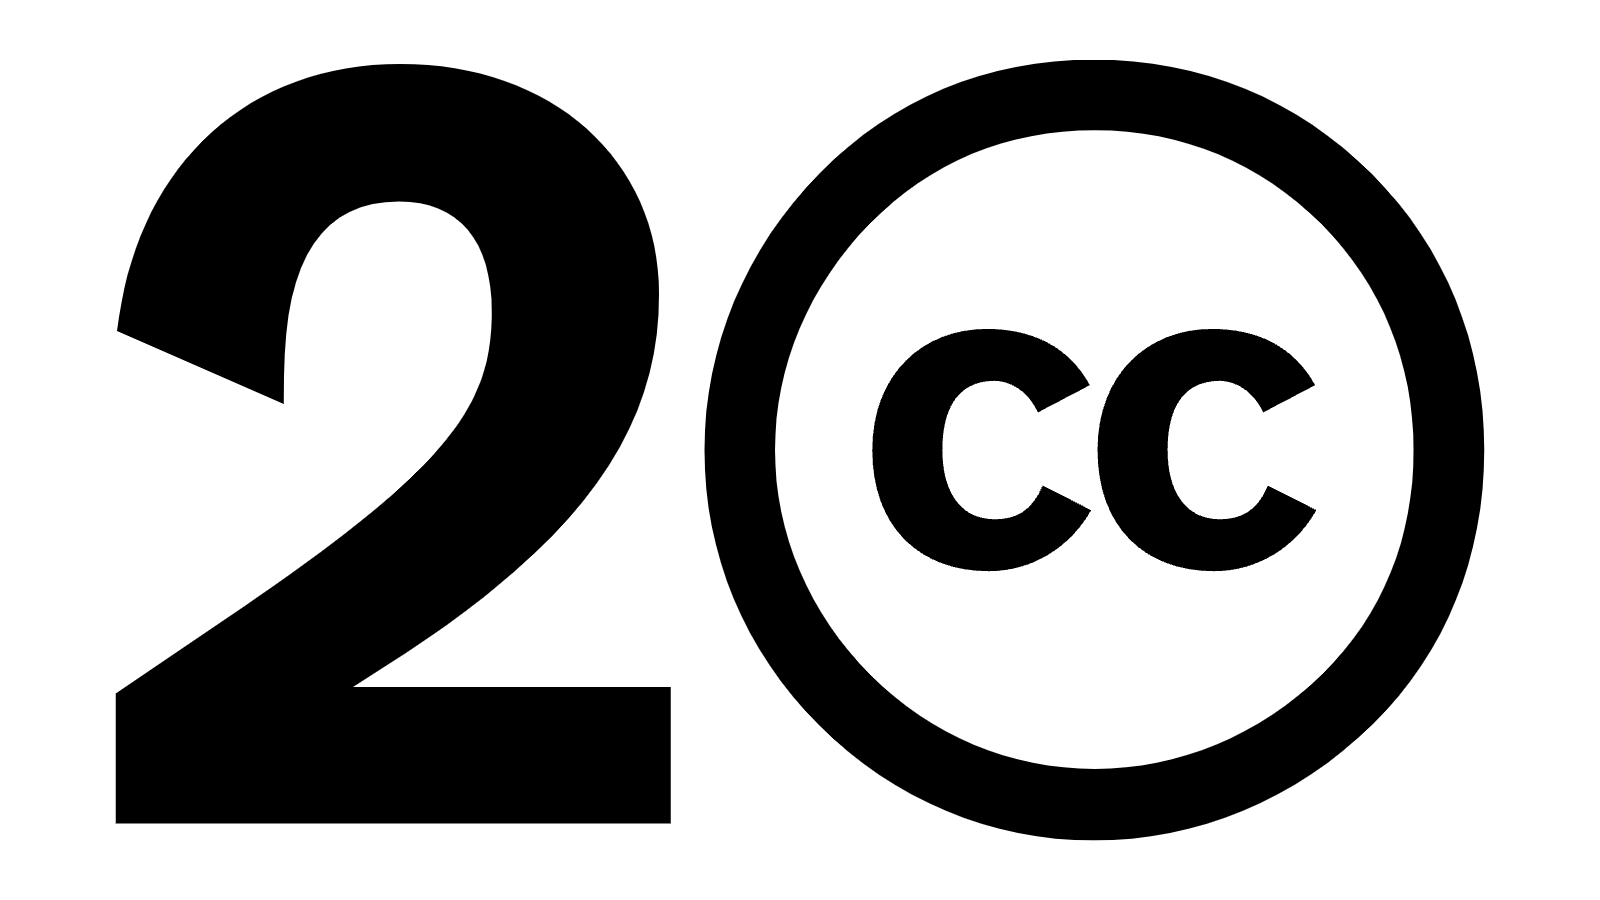 Creative commons attribution 4.0. Cc logo. Creative Commons Attribution 4.0 licence. Creative Commons logo.